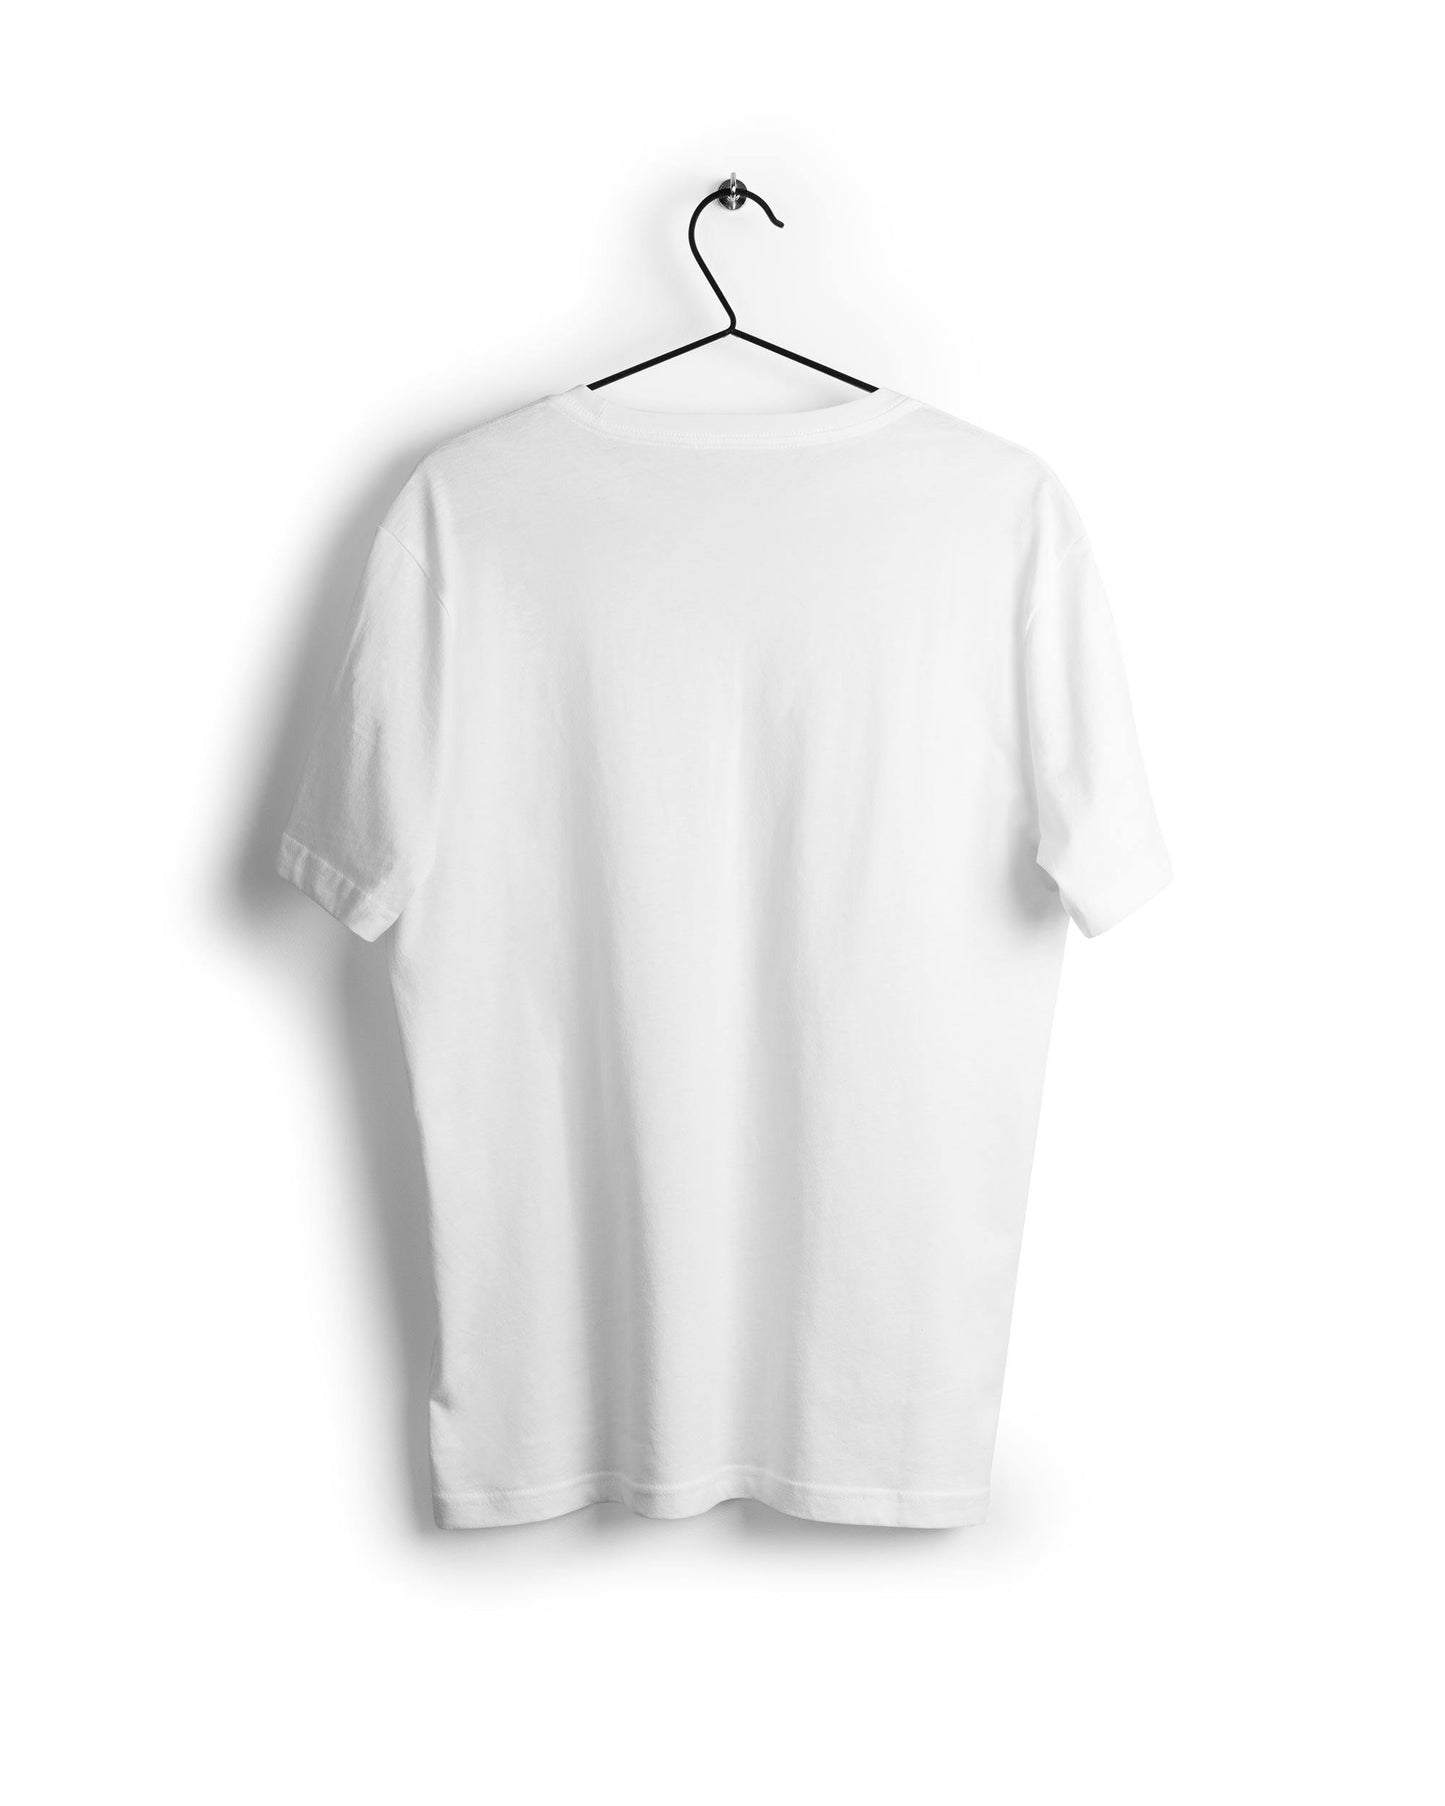 Tokyo La Casa De Papel X Ravin X Hippo - Digital Graphics Basic T-shirt White - Ravin 